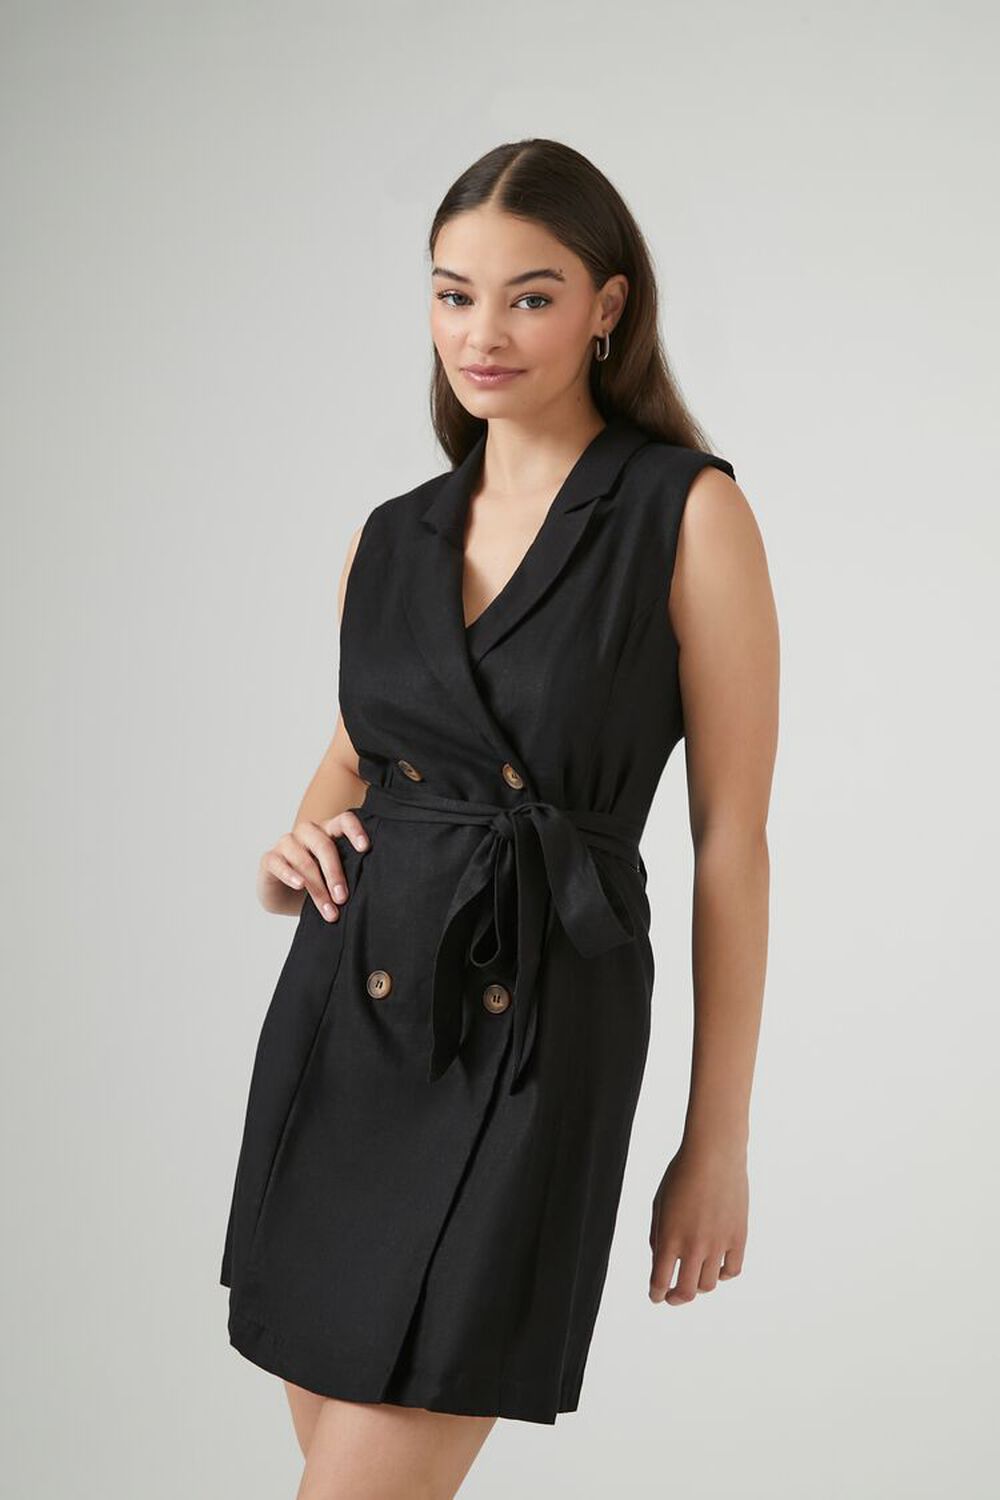 BLACK Linen-Blend Sleeveless Wrap Dress, image 1